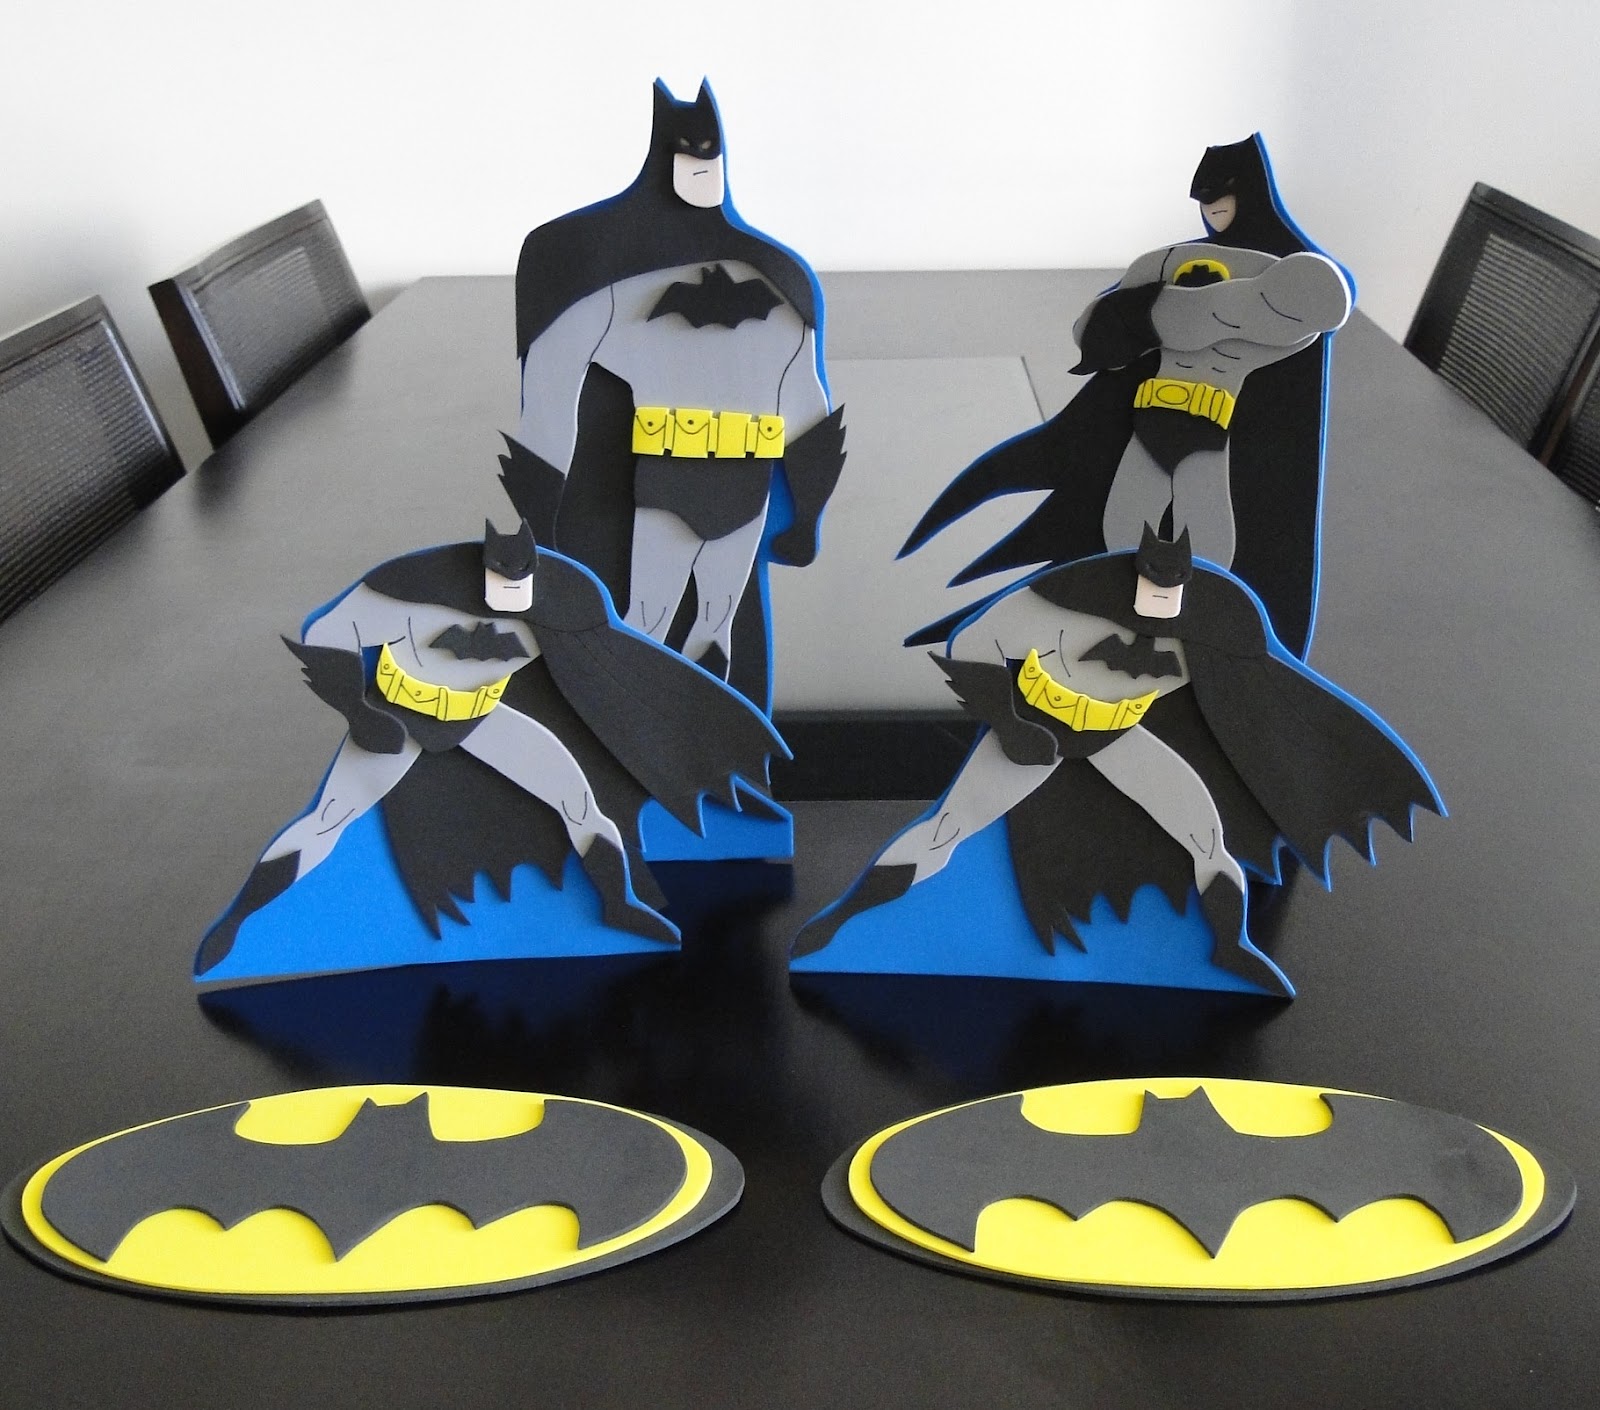 EVA Sob Medida - Artesanato e Moldes: Batman em EVA